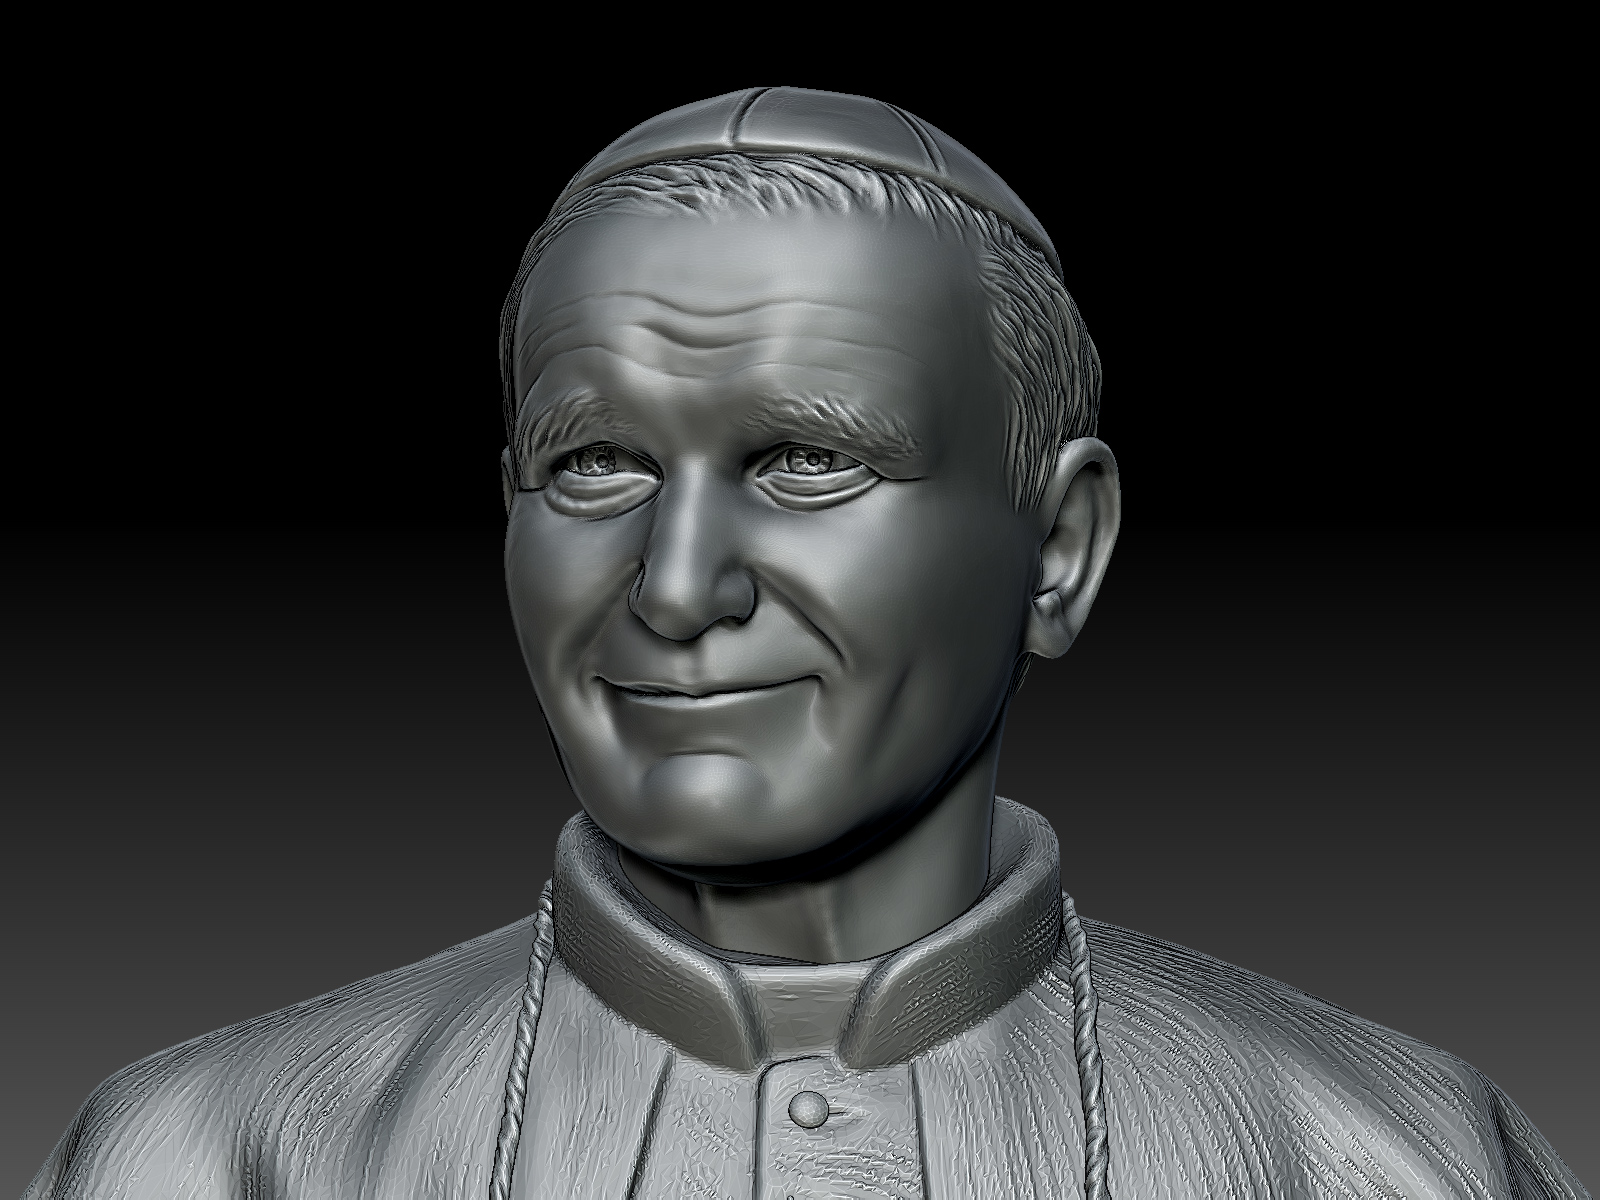 3D Statue of Saint John Paul II the Great